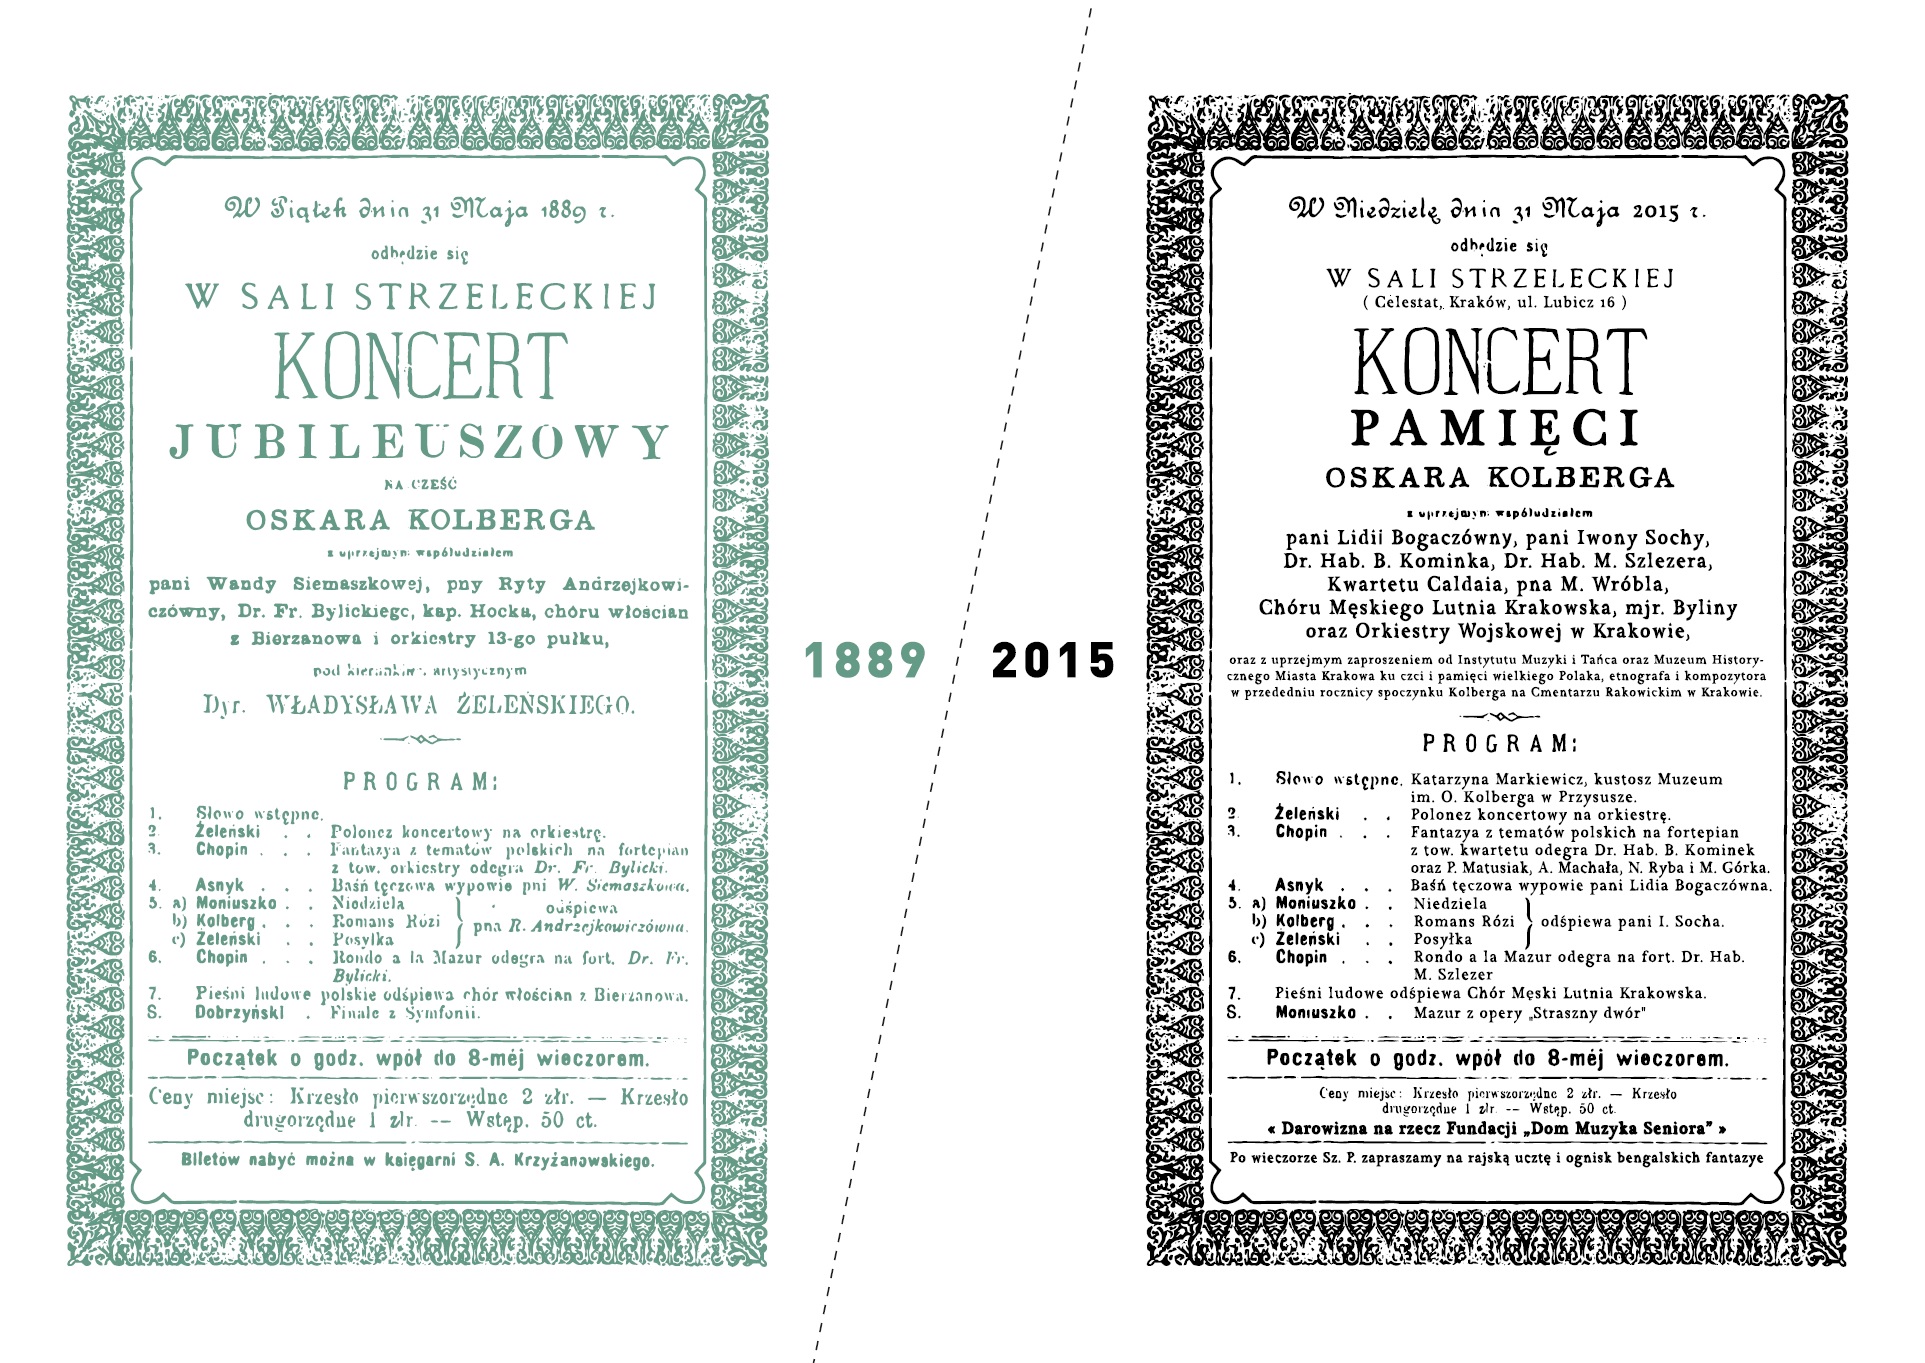 Koncert pamięci Oskara Kolberga | Replika koncertu z 1889 roku - miniatura